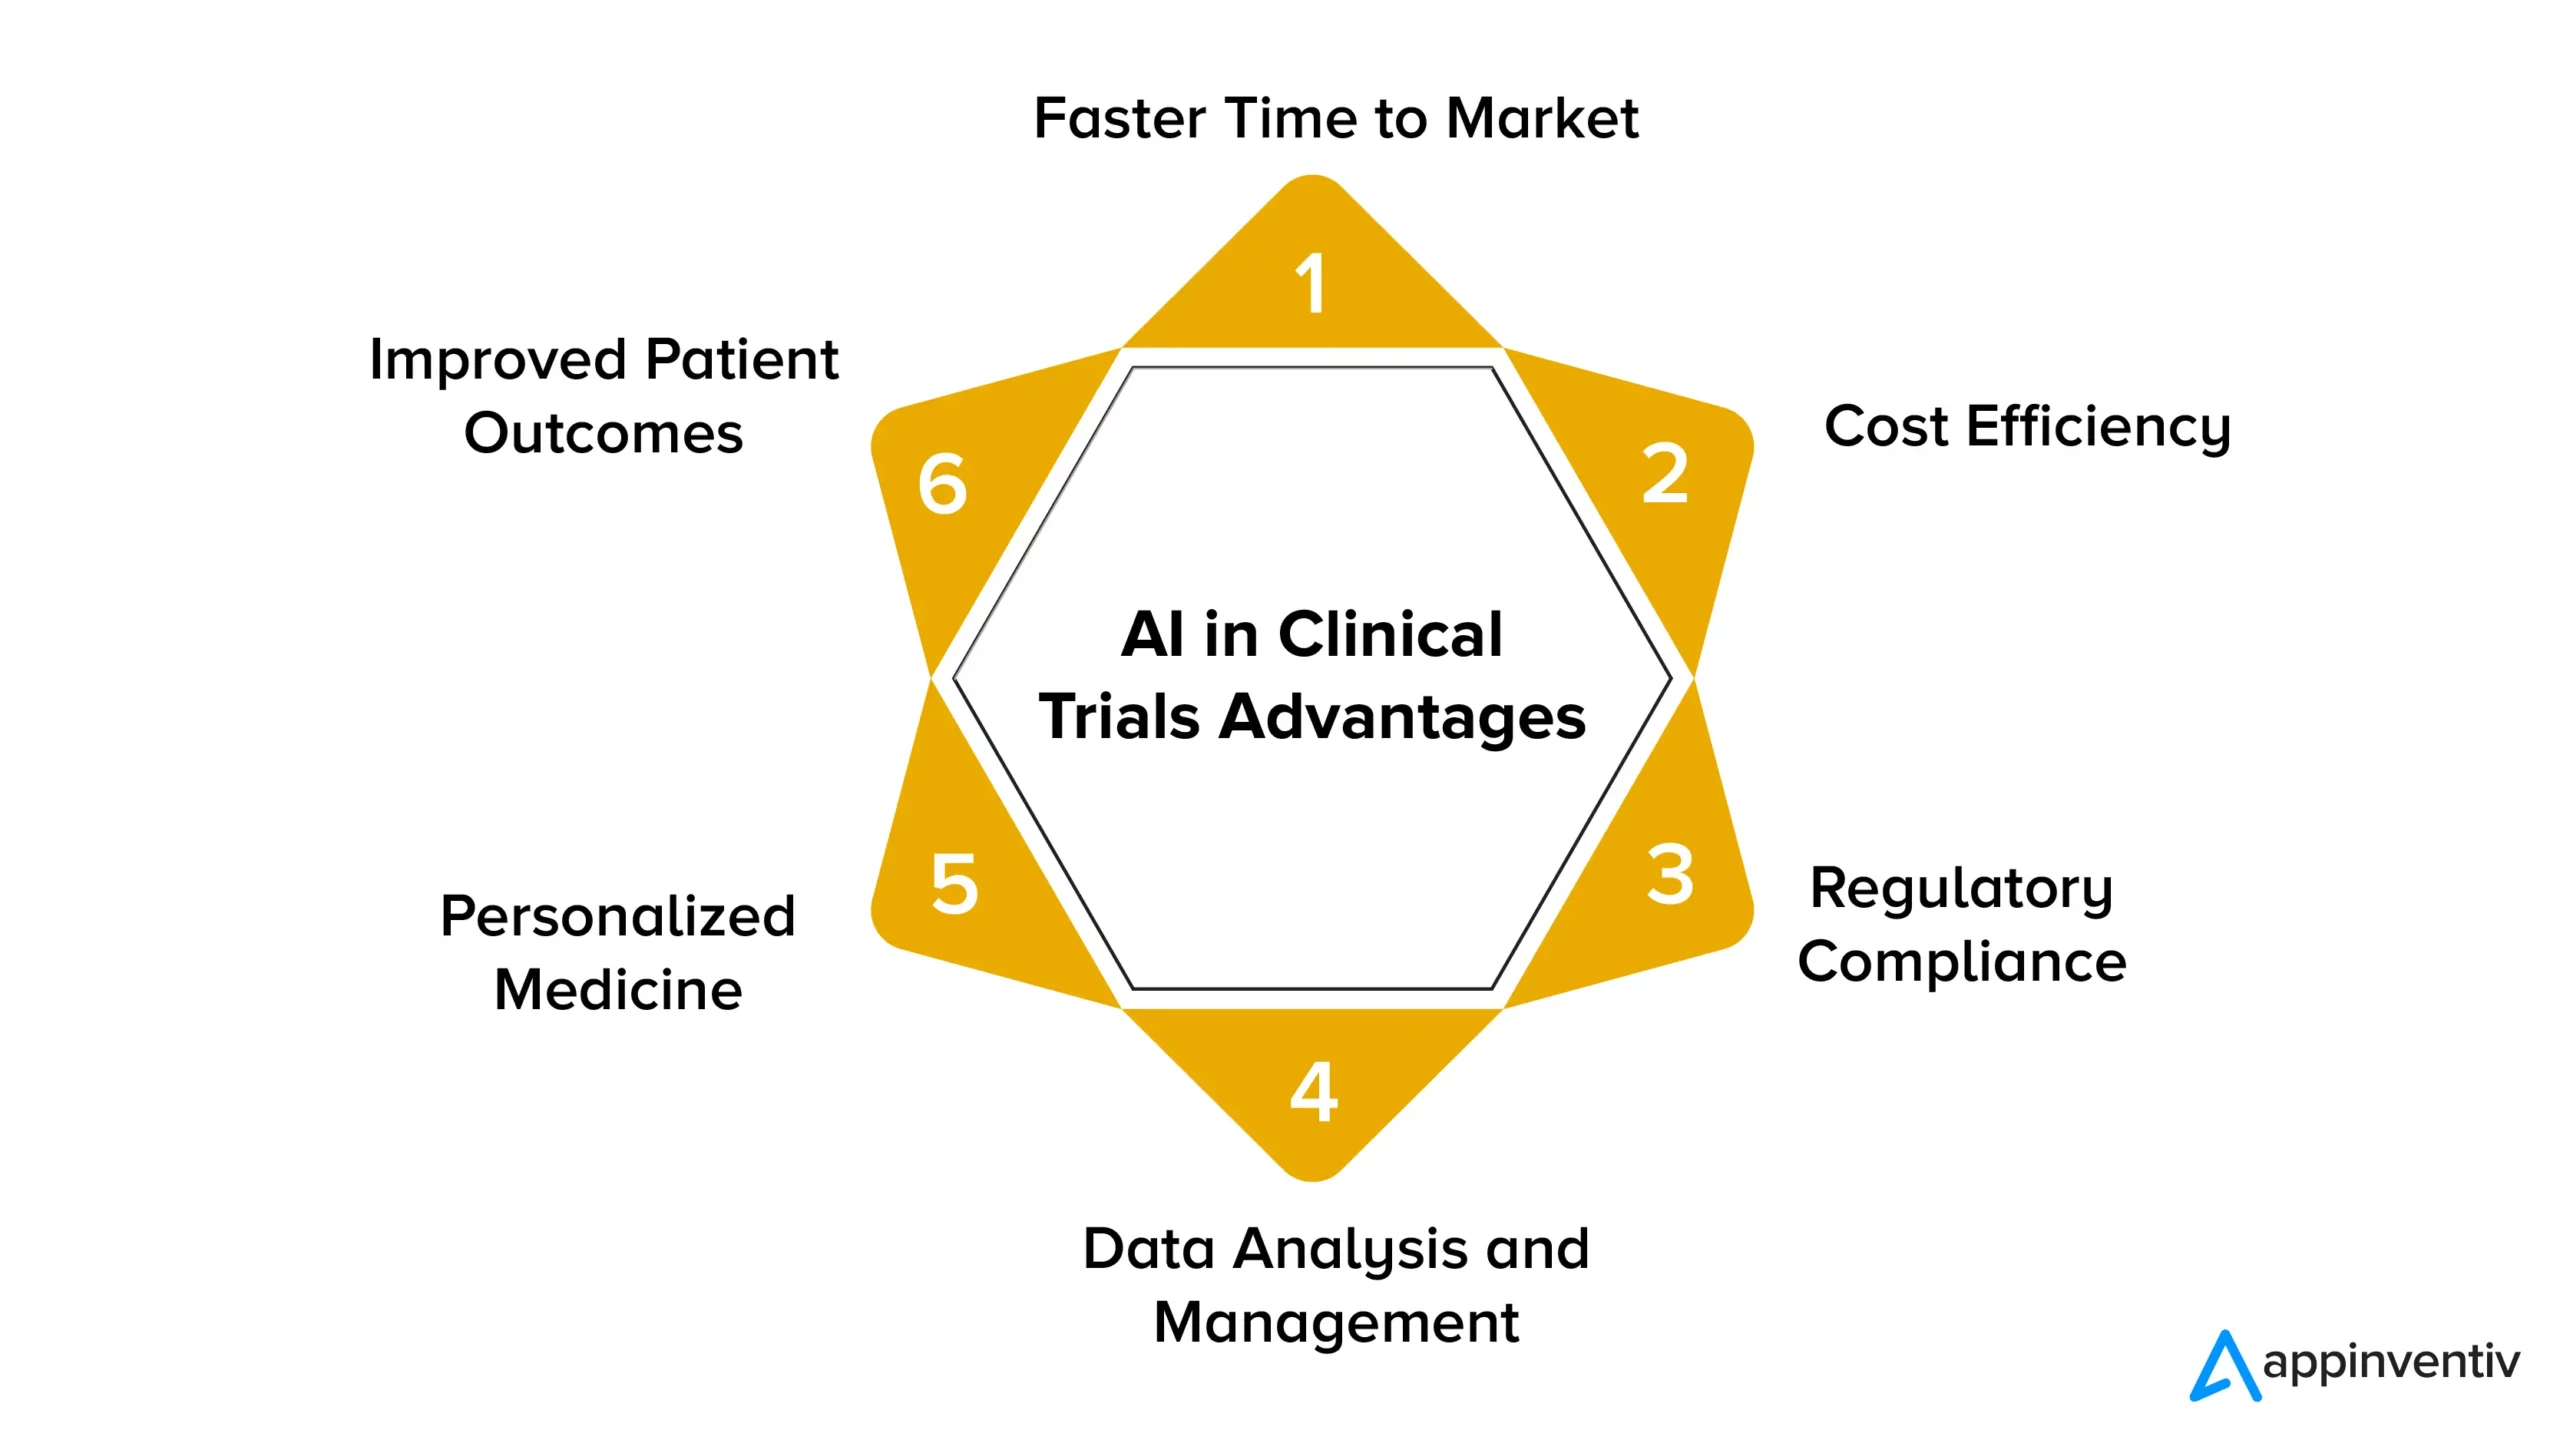 AI in Clinical Trials Advantages